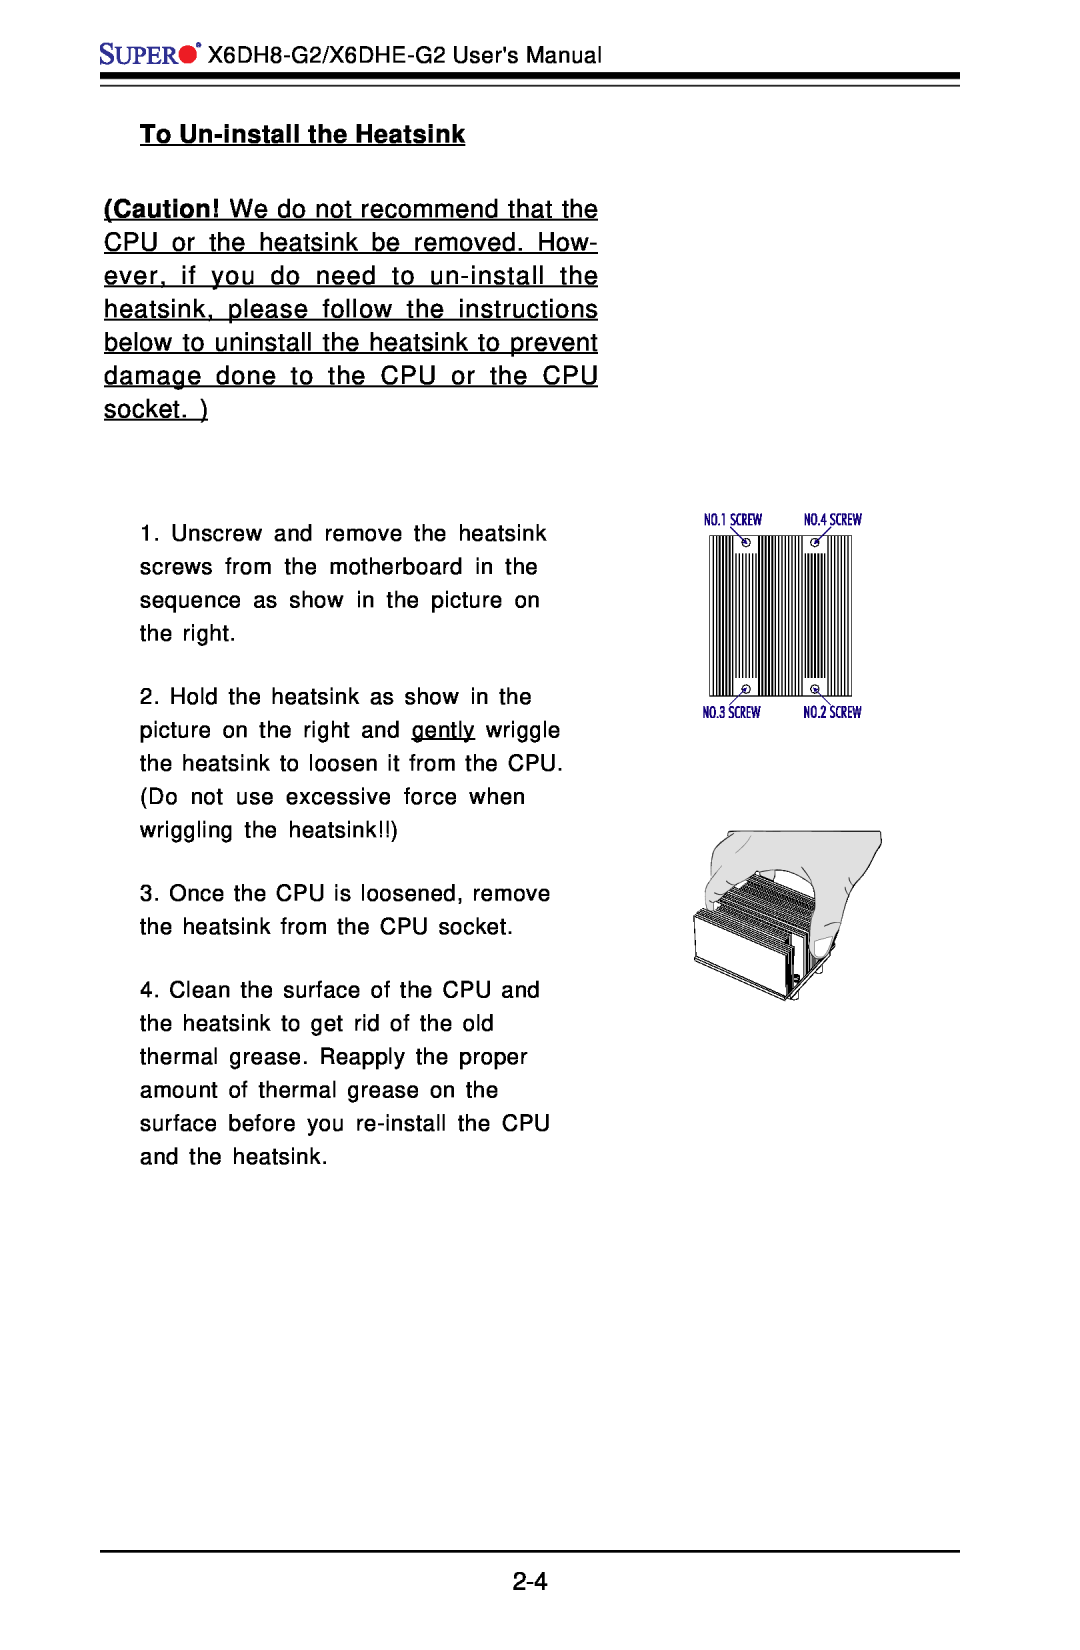 SUPER MICRO Computer X6DH8-G2, X6DHE-G2 manual To Un-install the Heatsink 